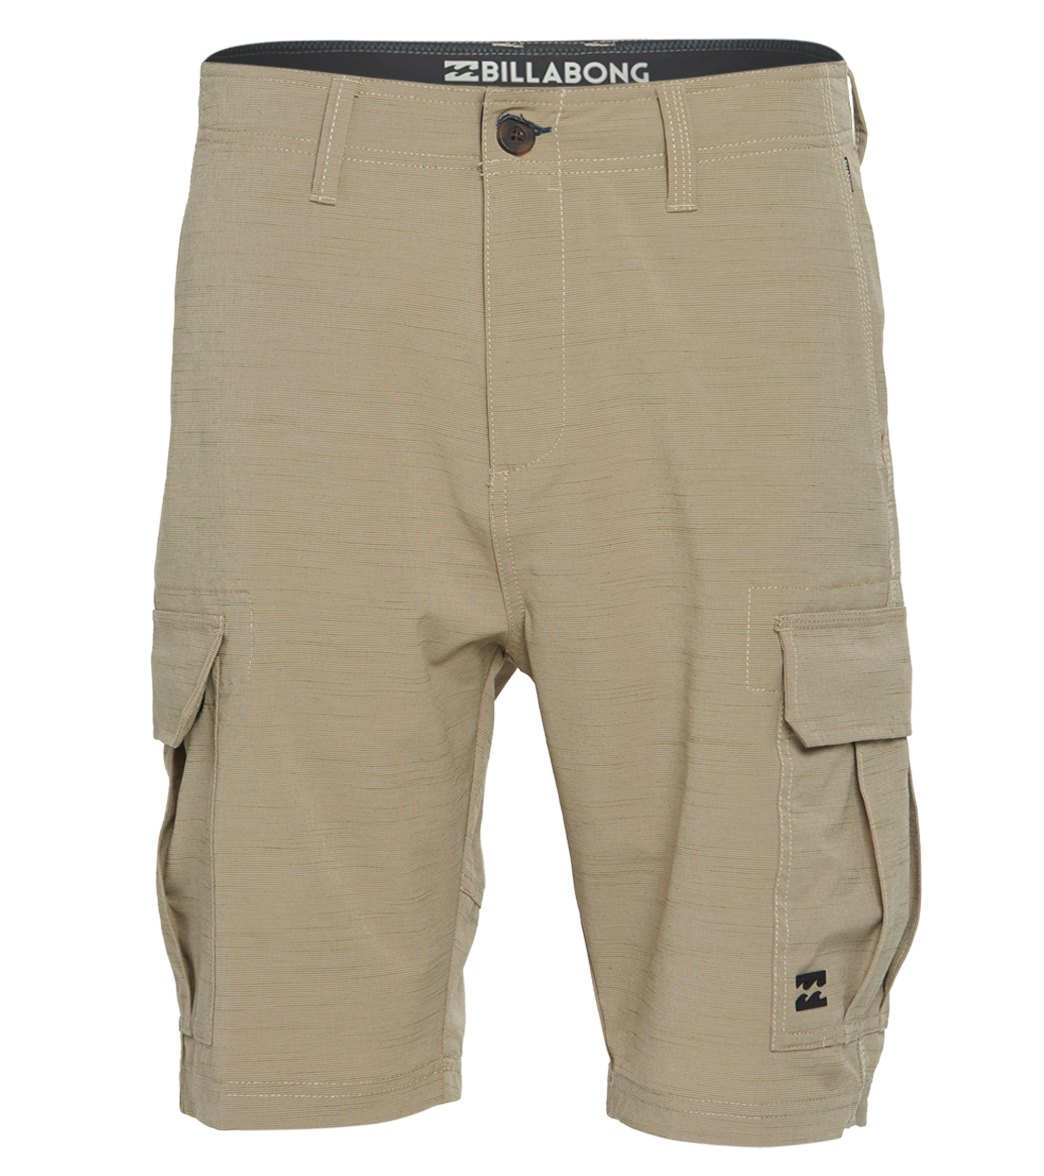 Billabong Men's Scheme X Cargo Shorts - Light Khaki 28 Cotton/Polyester - Swimoutlet.com